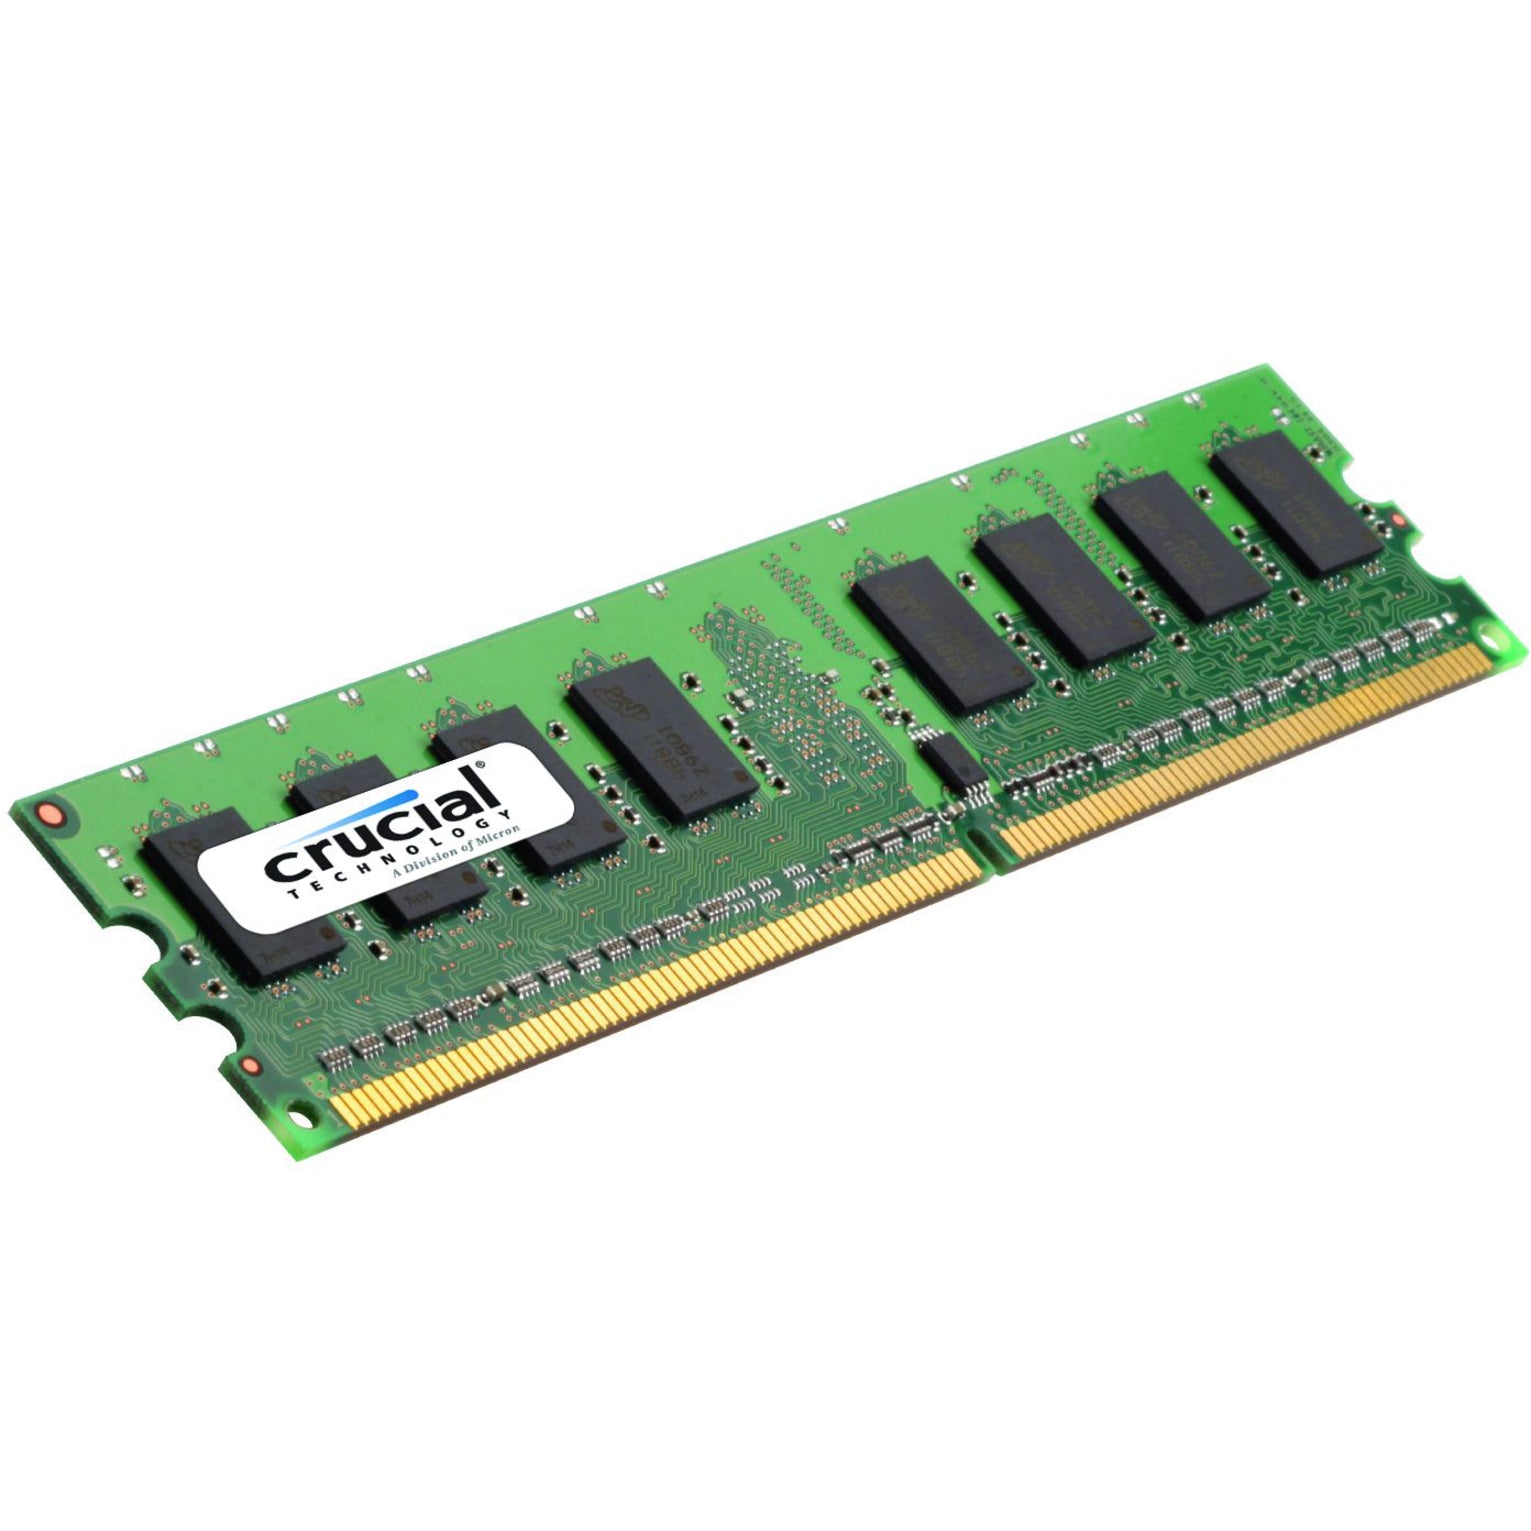 Crucial CT51264BD160B 4GB DDR3L SDRAM Memory Module, Lifetime Warranty, 1600 MHz, Non-ECC, 1.35V